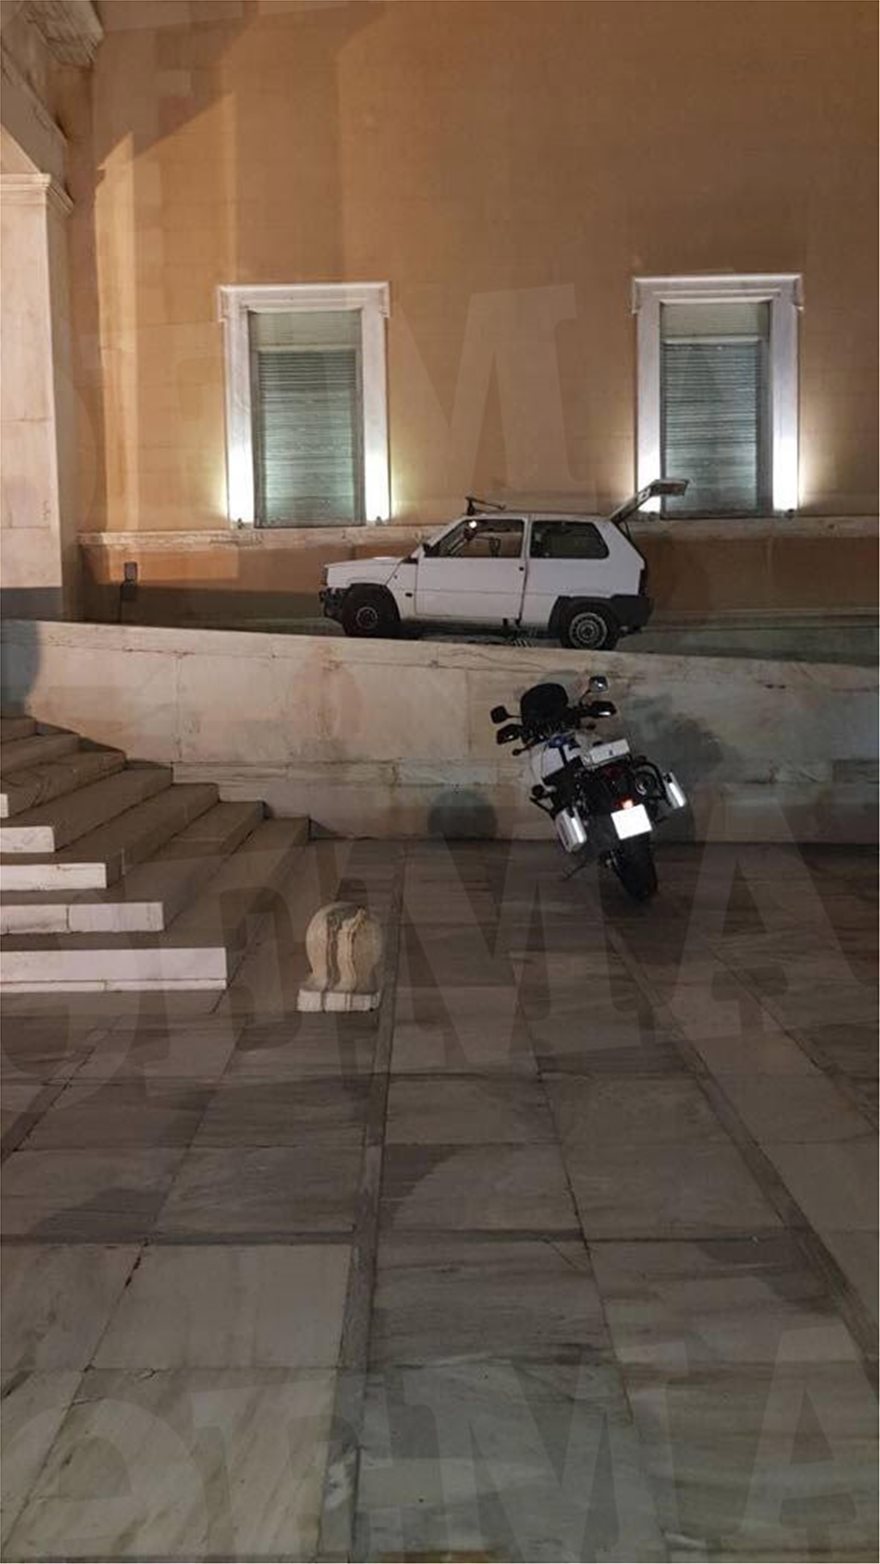 Fiat Panda που εισέβαλε στη Βουλή - Στο 1,30 το οινόπνευμα που είχε ο οδηγός - Φωτογραφία 2